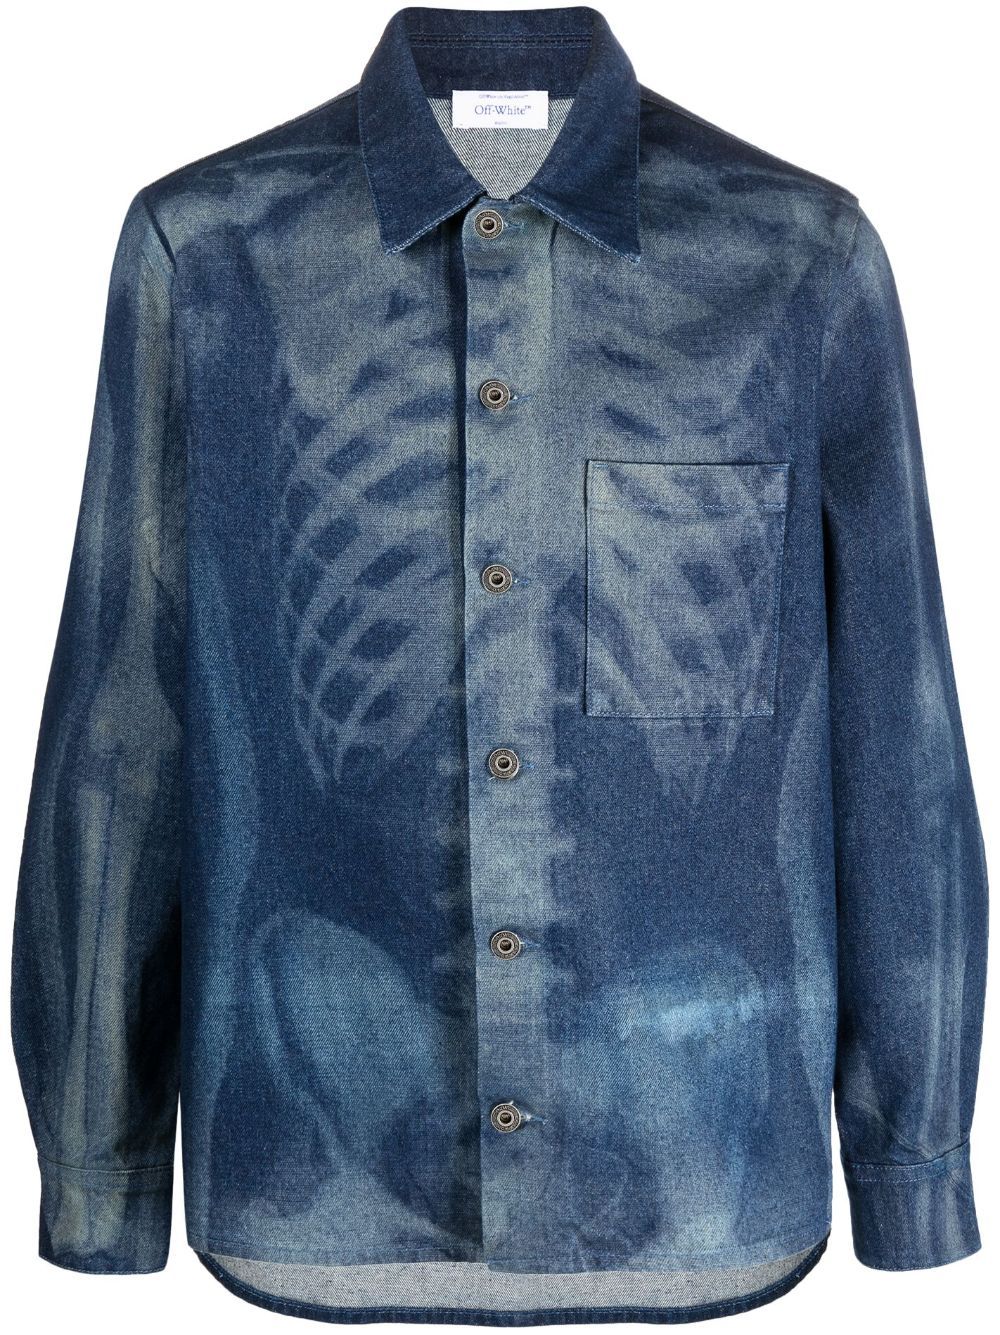 Men's SS23 Blue Denim Shirt by Off-White